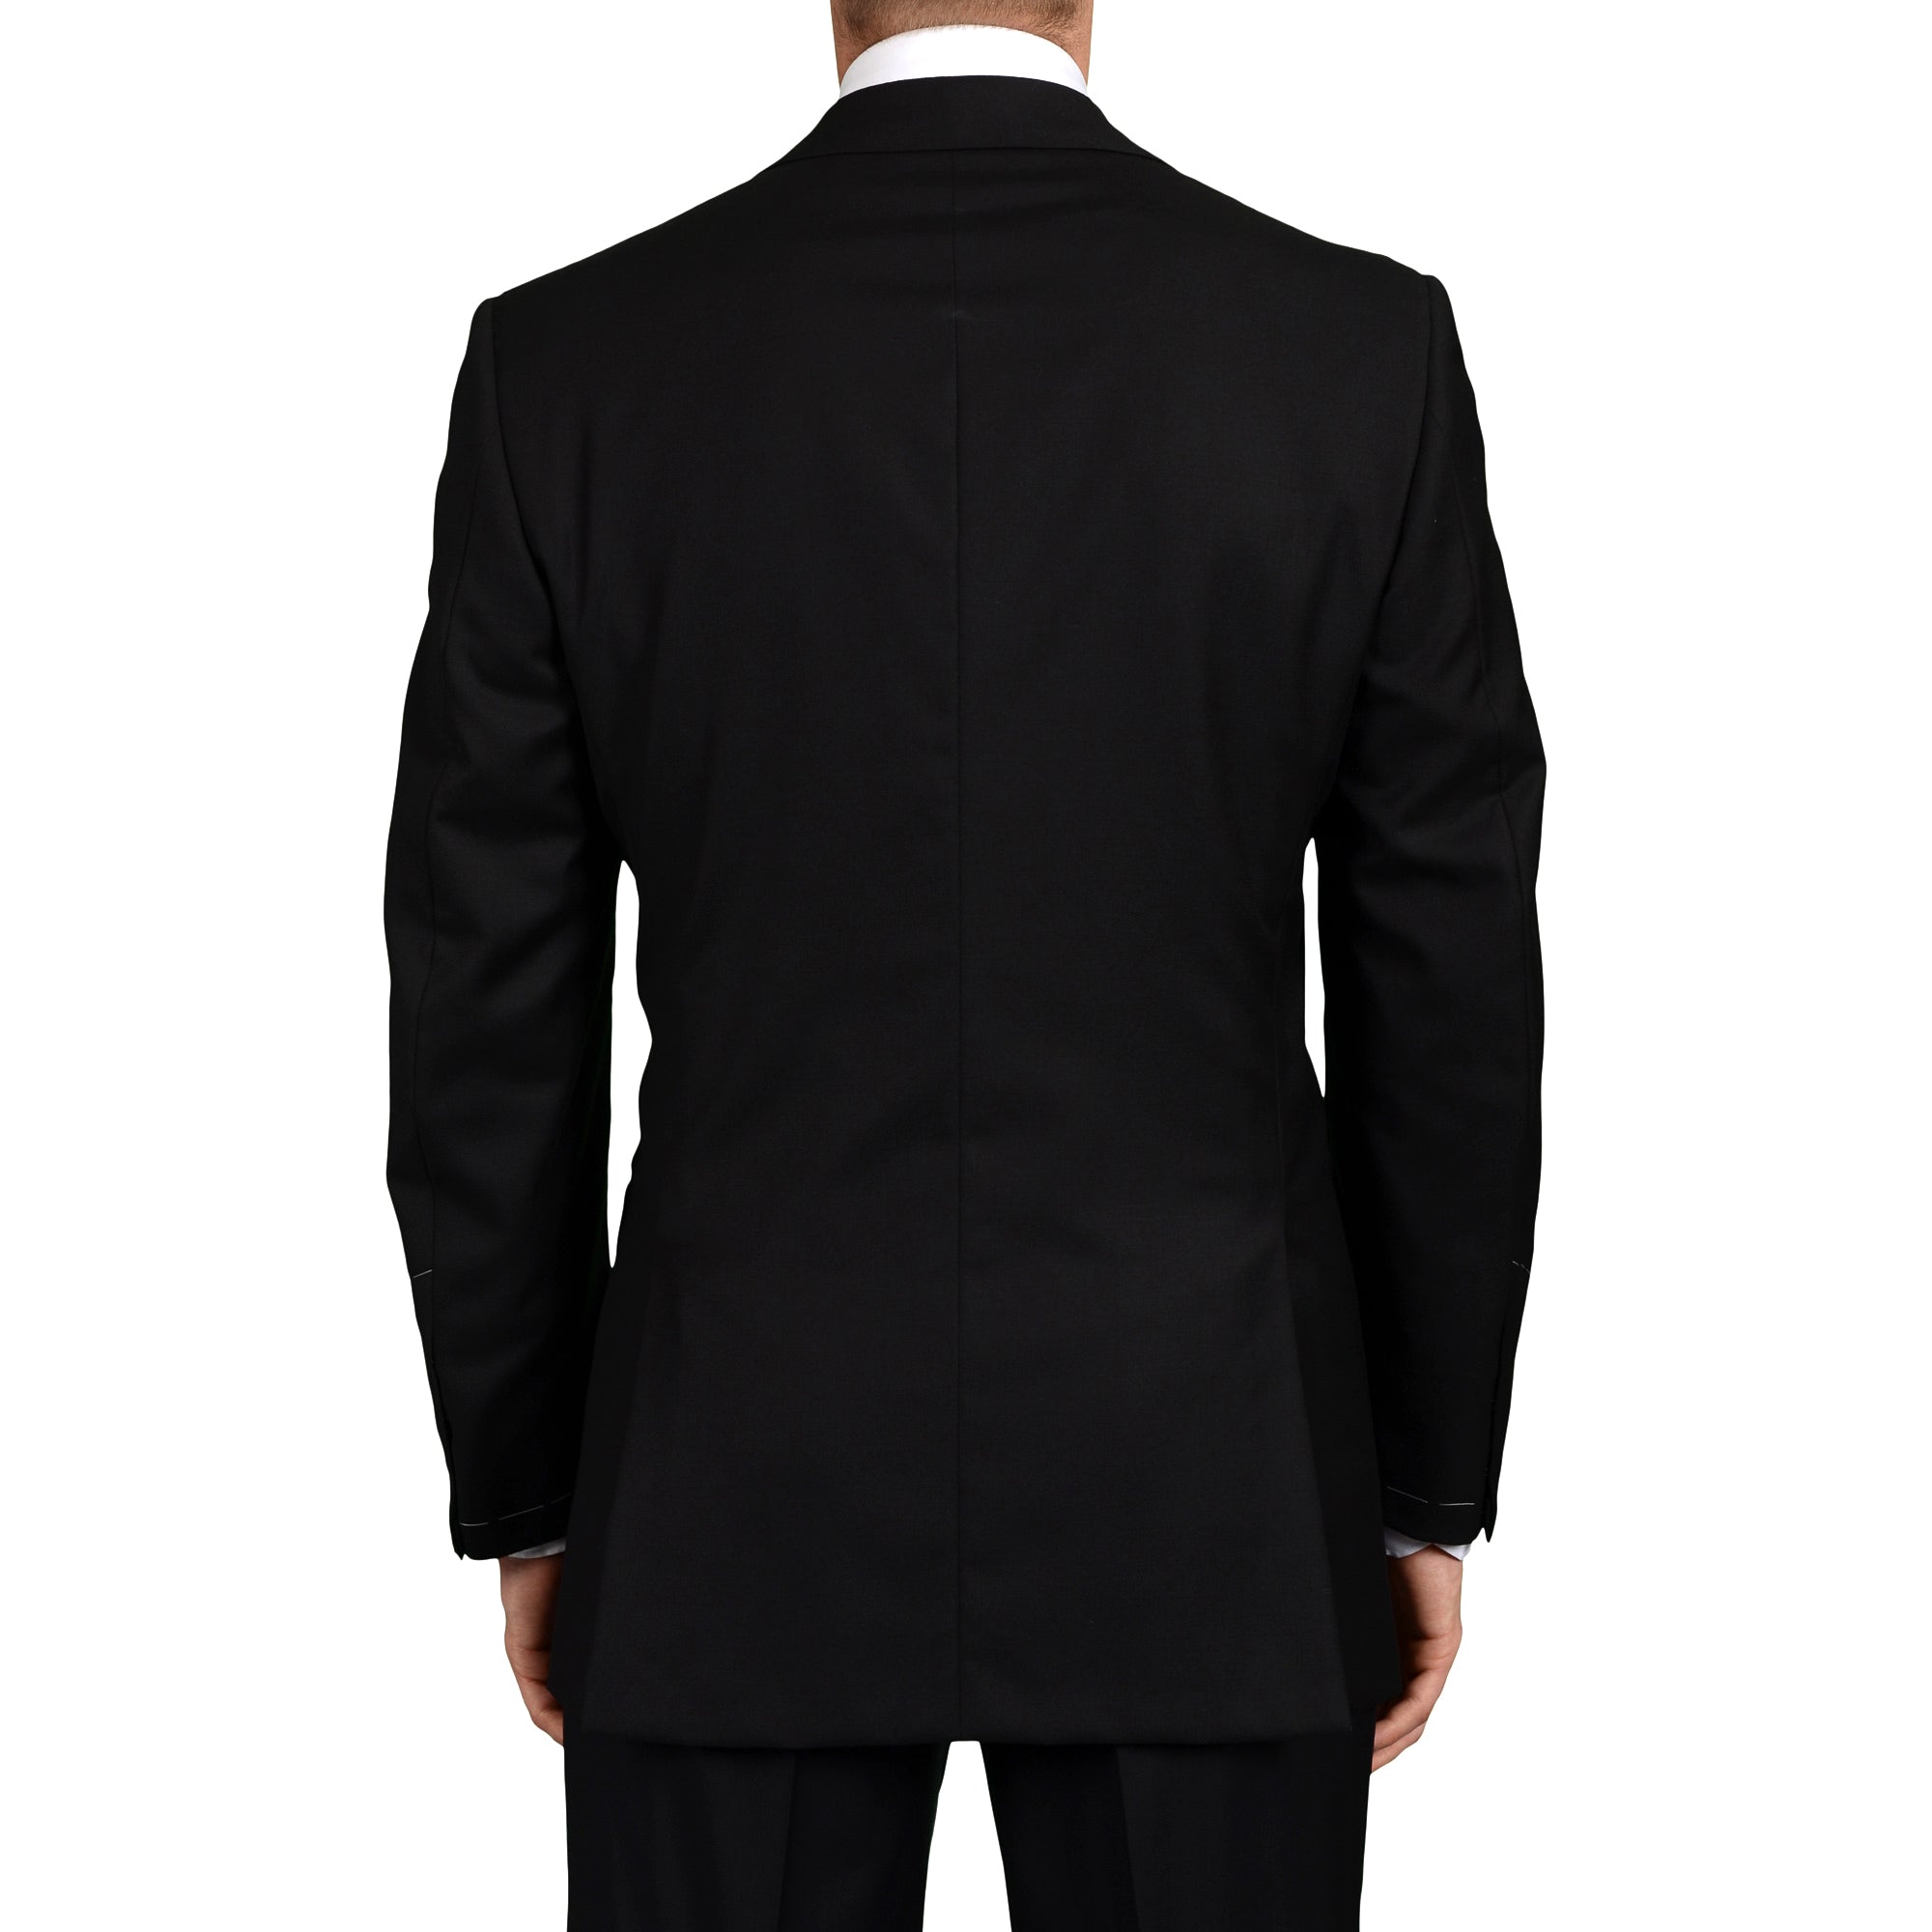 D'AVENZA for FERU Handmade Black Wool Elegant Suit EU 50 NEW US 40 D'AVENZA